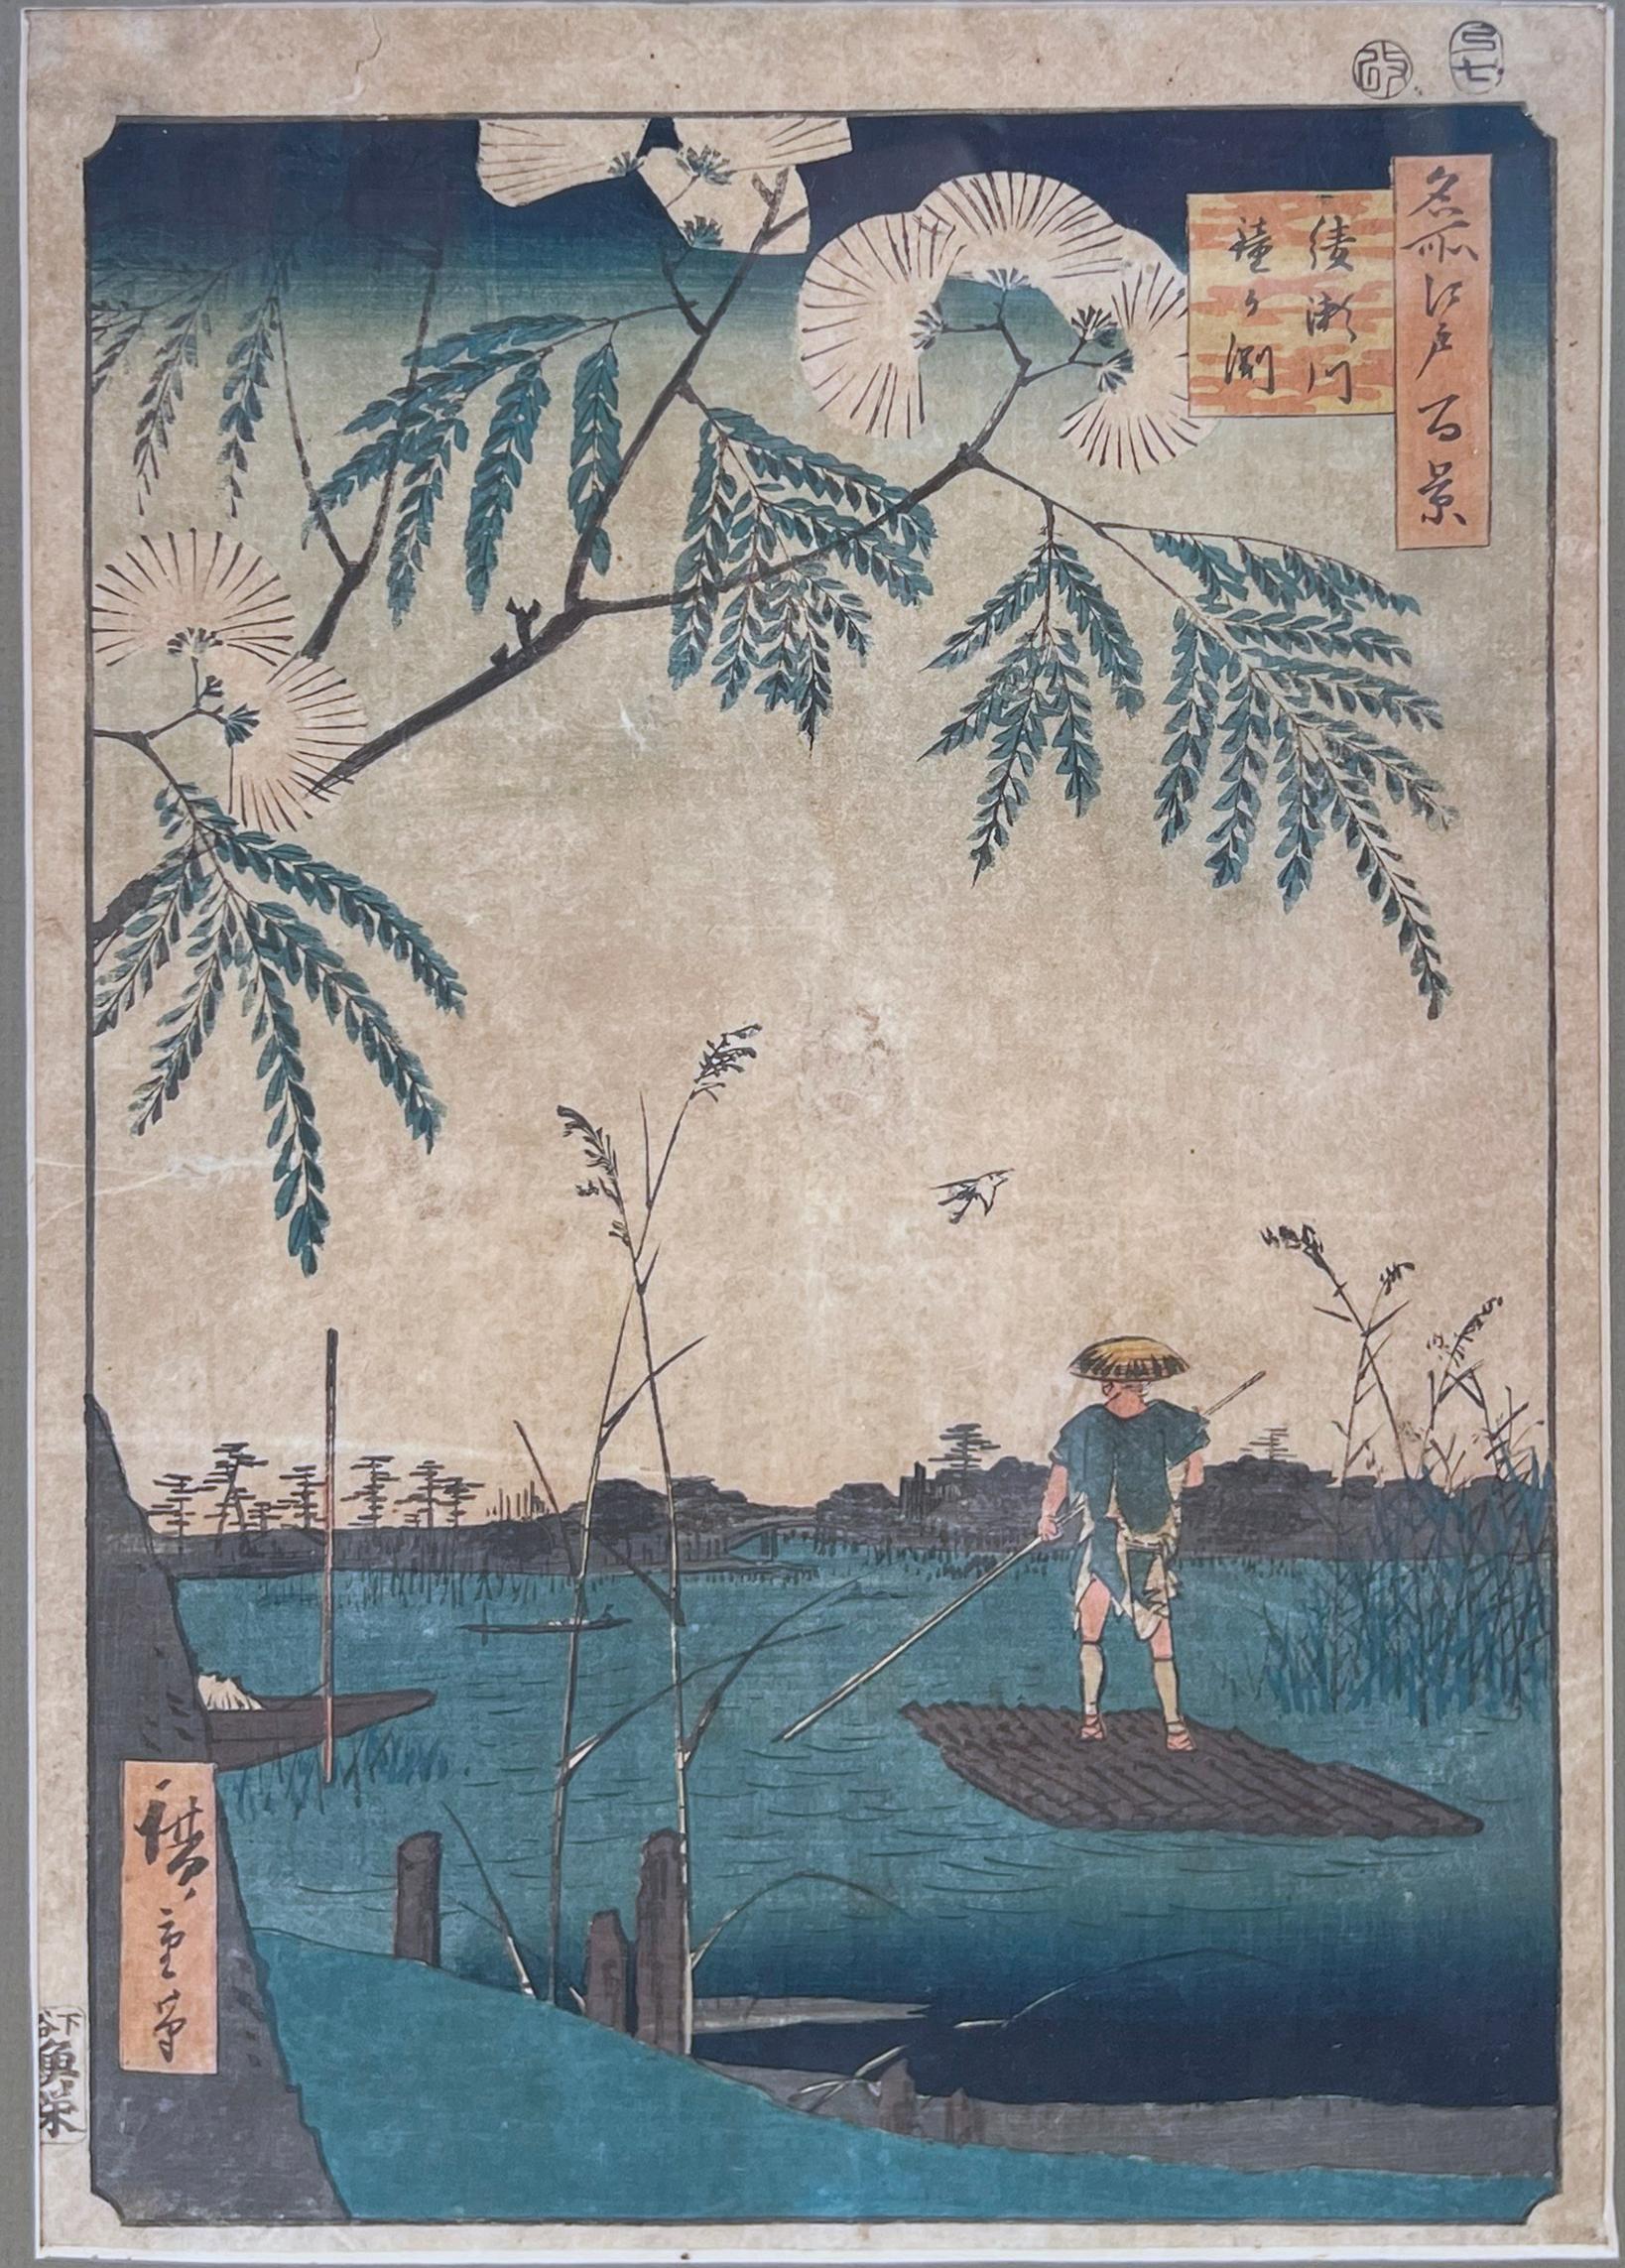 The Ayase River and Kanegafuchi, Summer, One Hundred Famous Views of Edo  - Print by Utagawa Hiroshige (Ando Hiroshige)